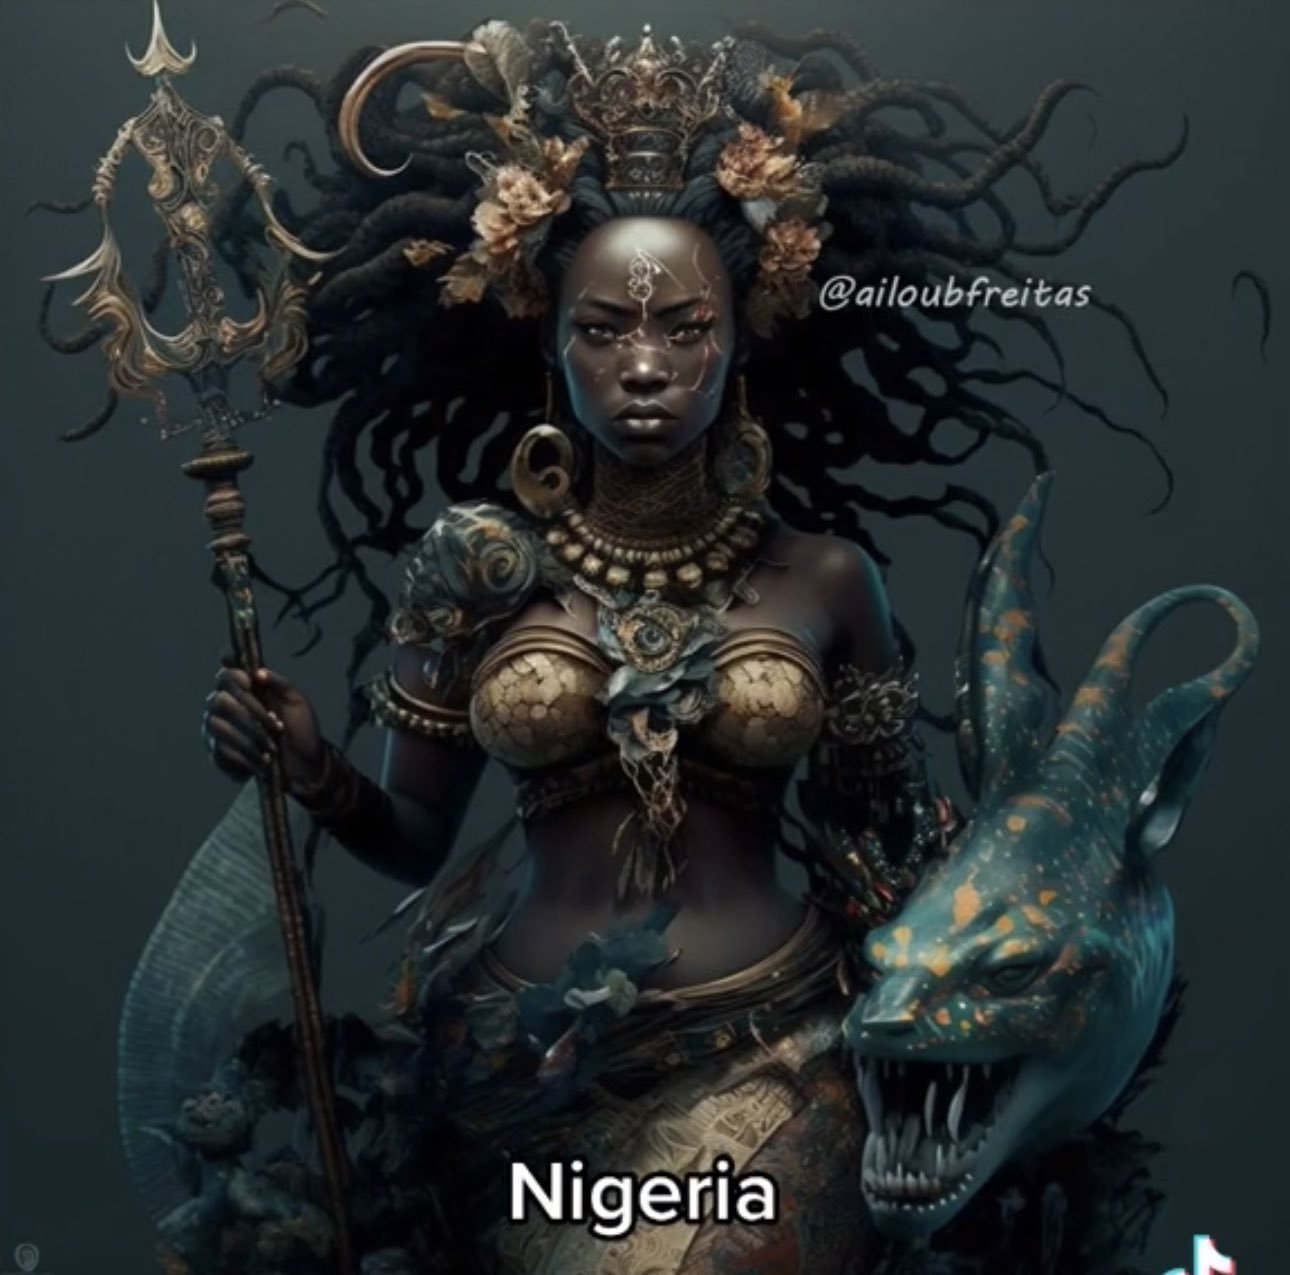 A vilã nigeriana usa diversos adornos característicos.